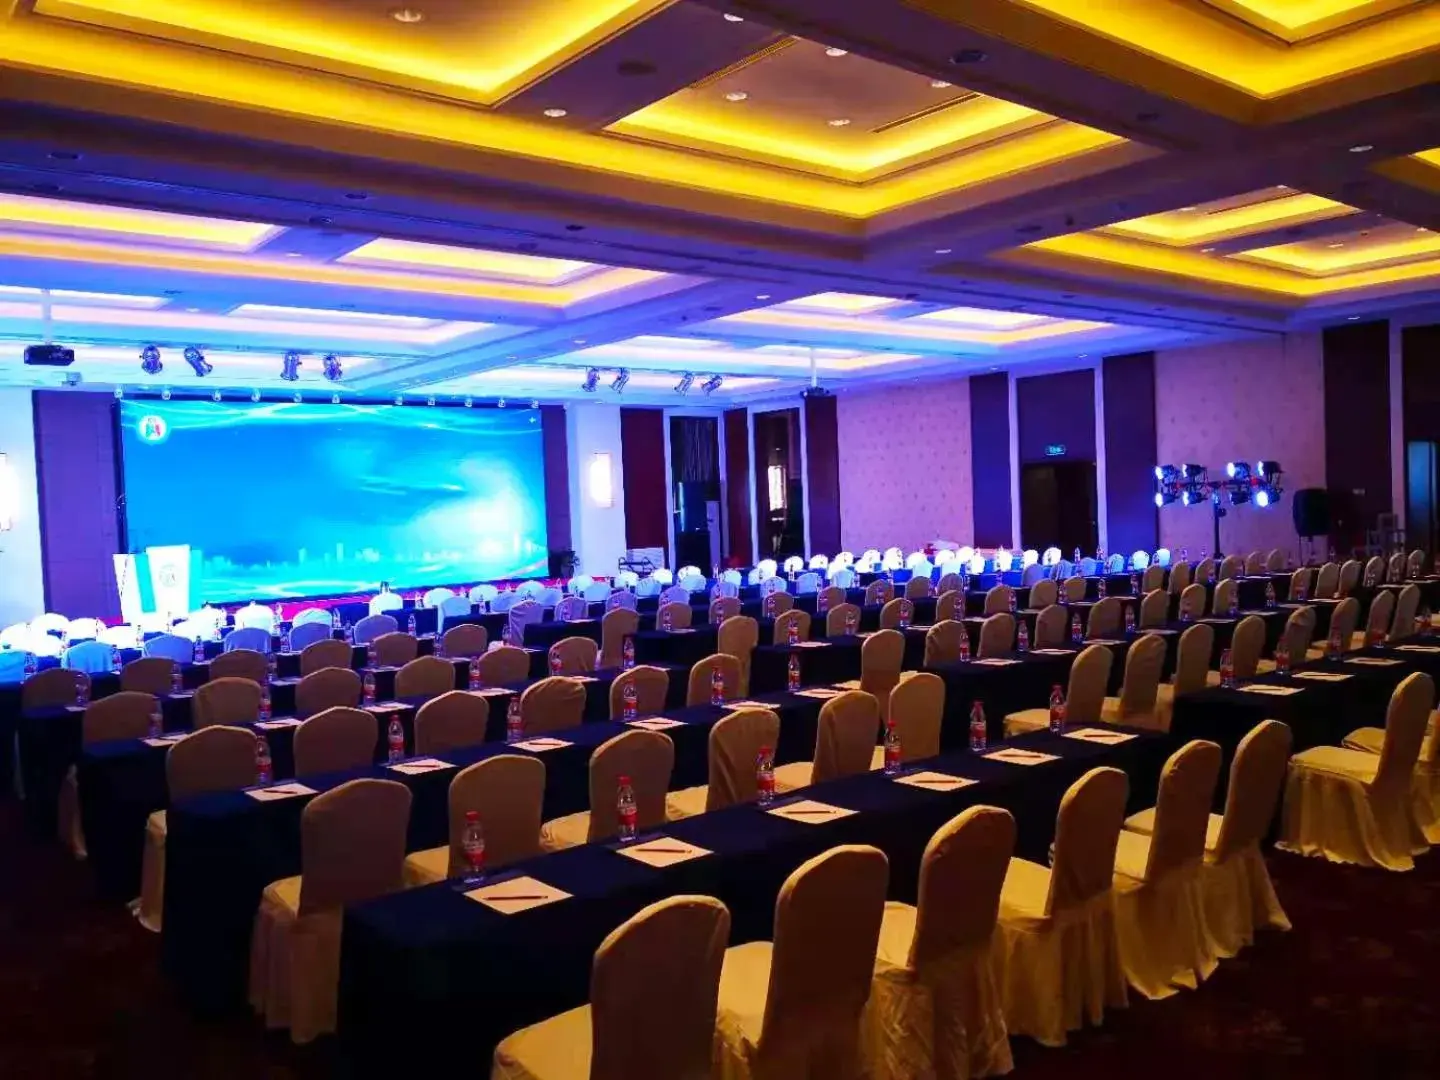 Business facilities, Banquet Facilities in Maritim Hotel Taicang Garden